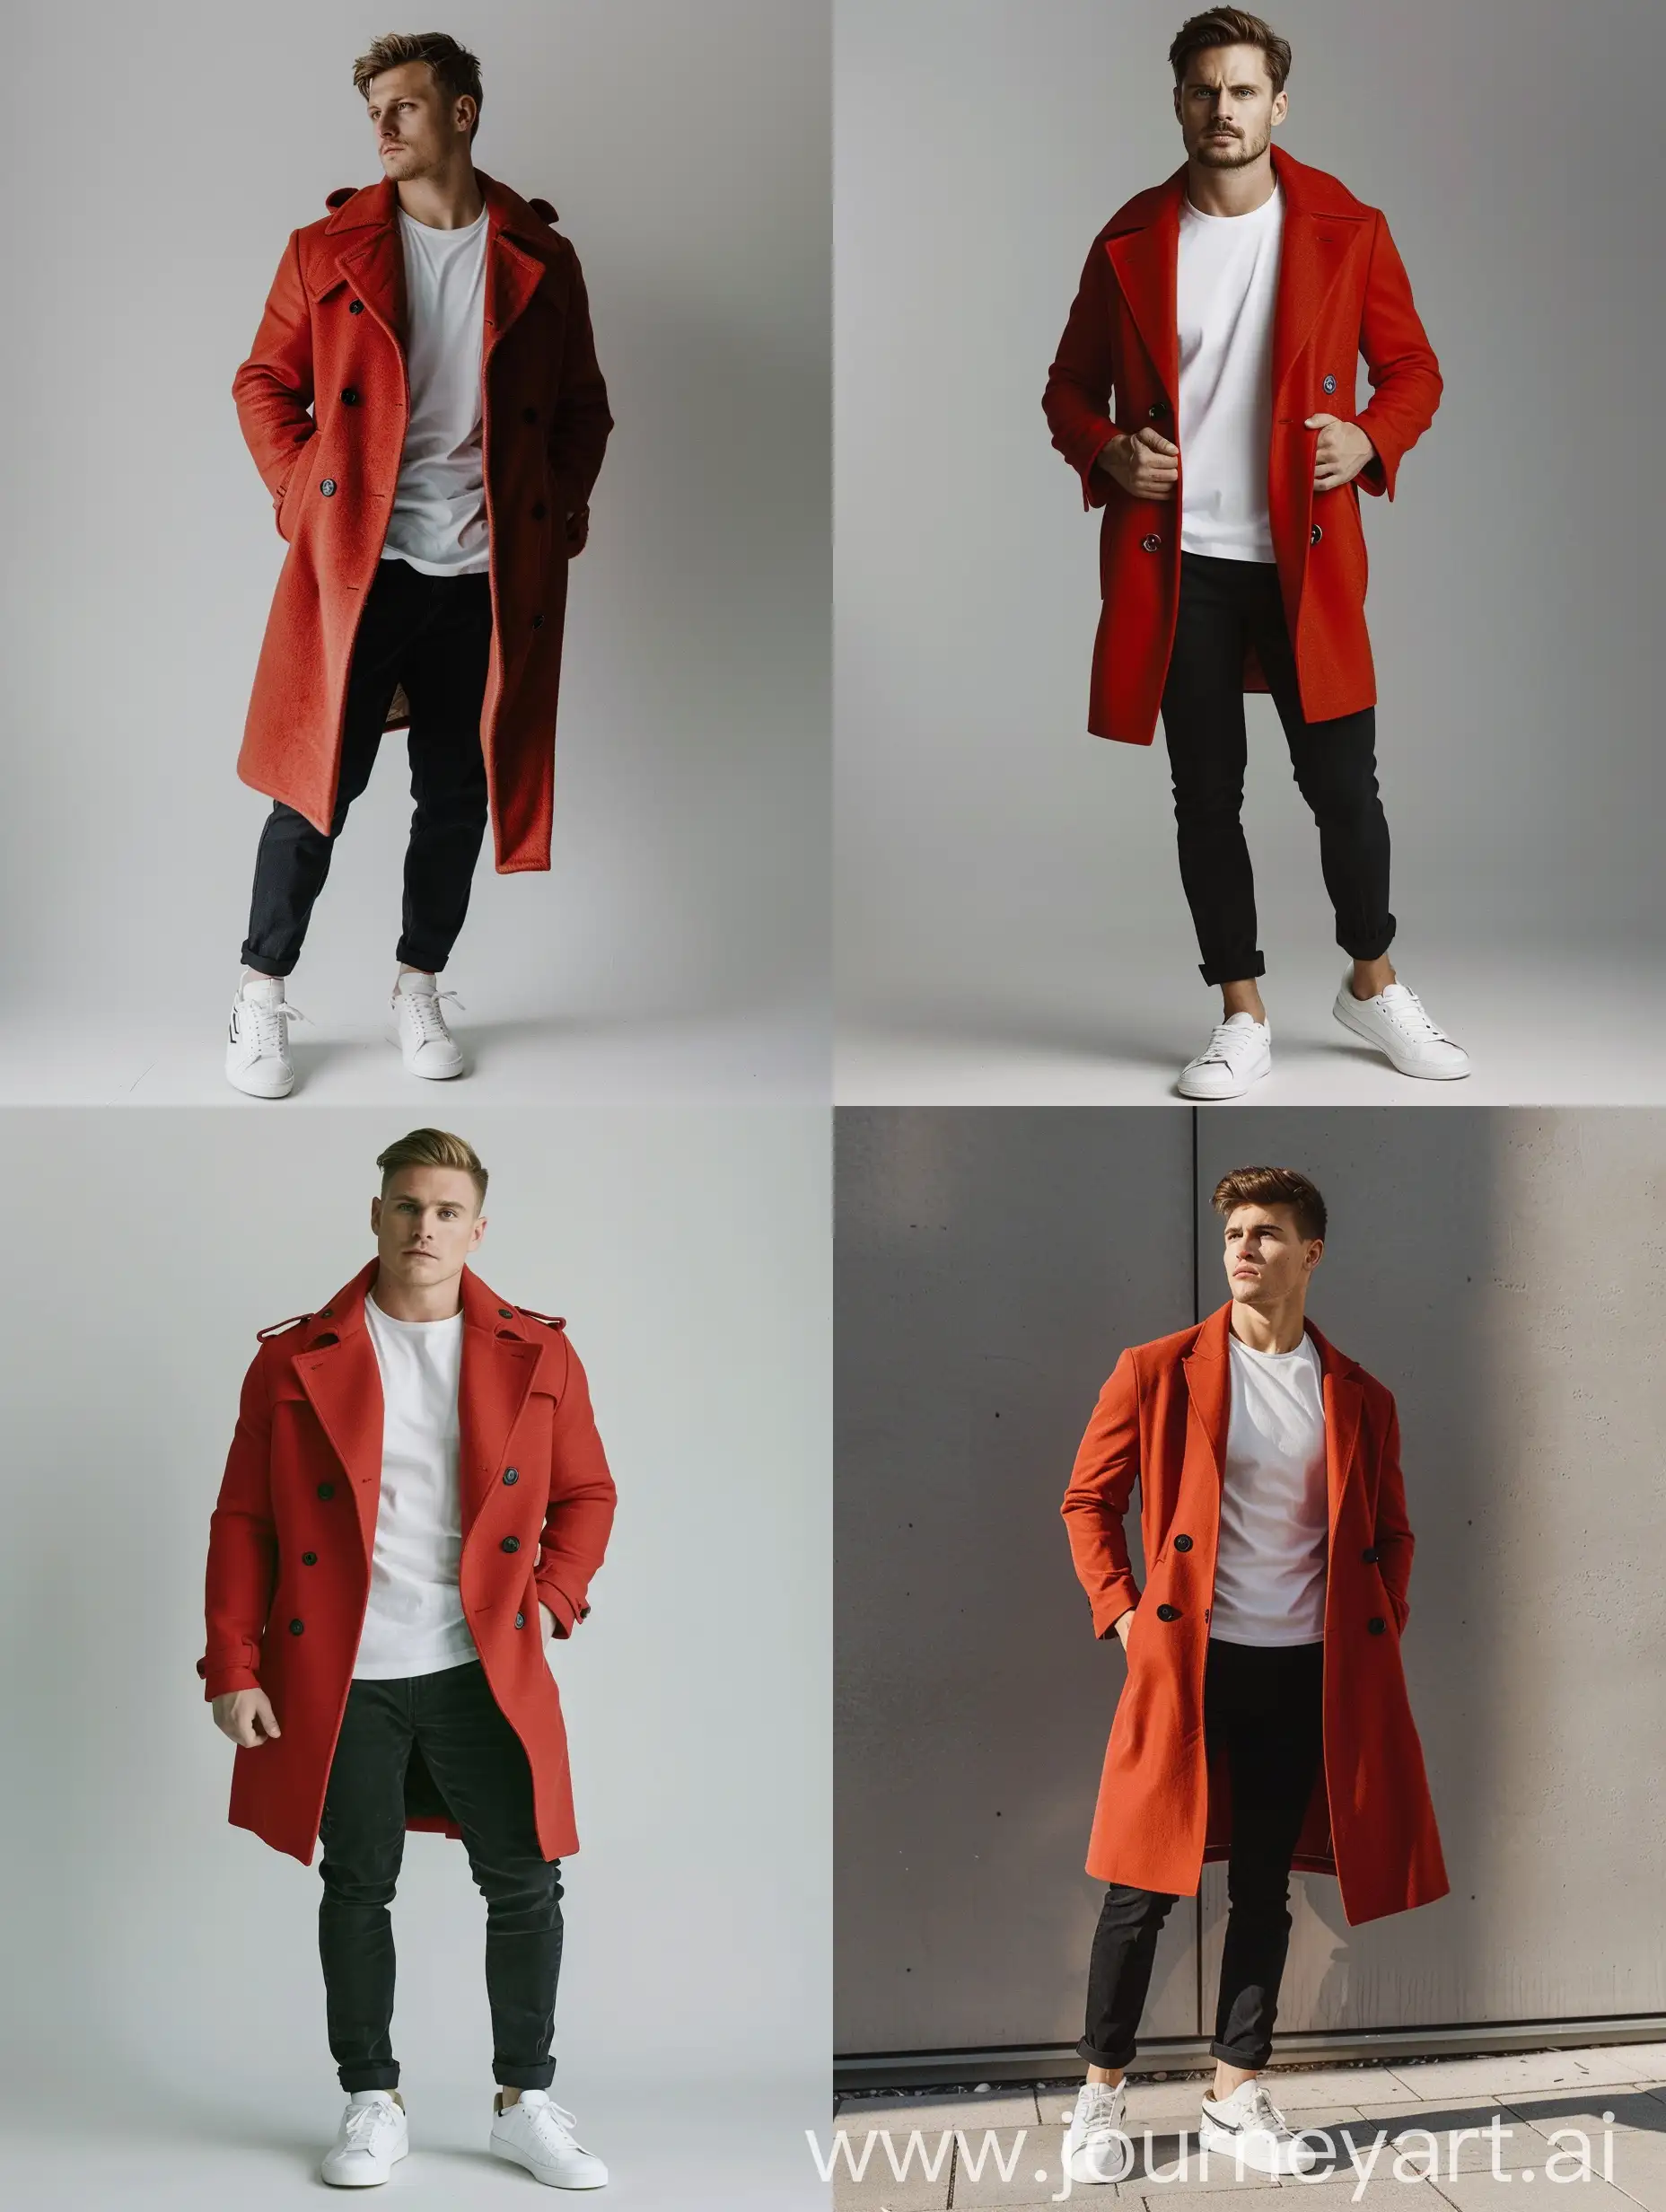 Stylish-Man-in-Red-Coat-Fashion-Portrait